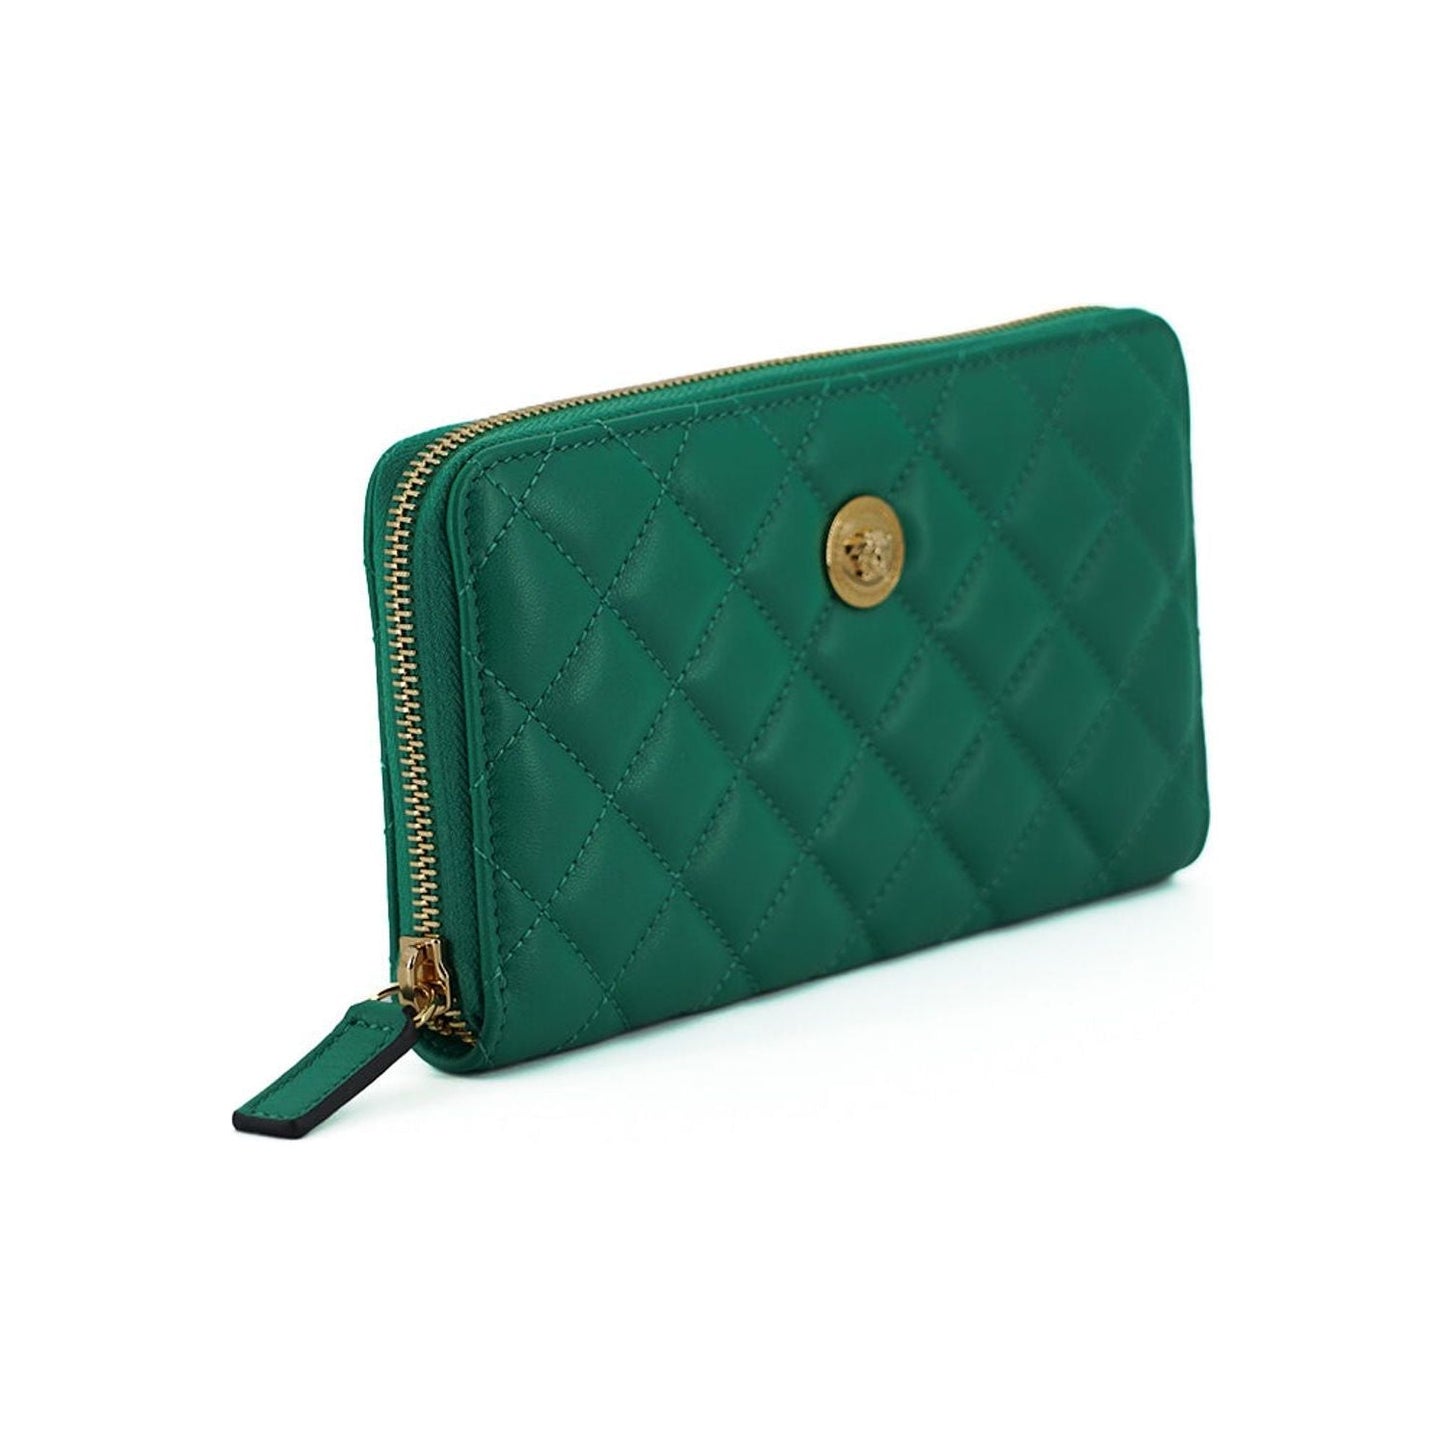 Versace Elegant Quilted Leather Zip Wallet WOMAN WALLETS green-leather-long-zip-around-wallet